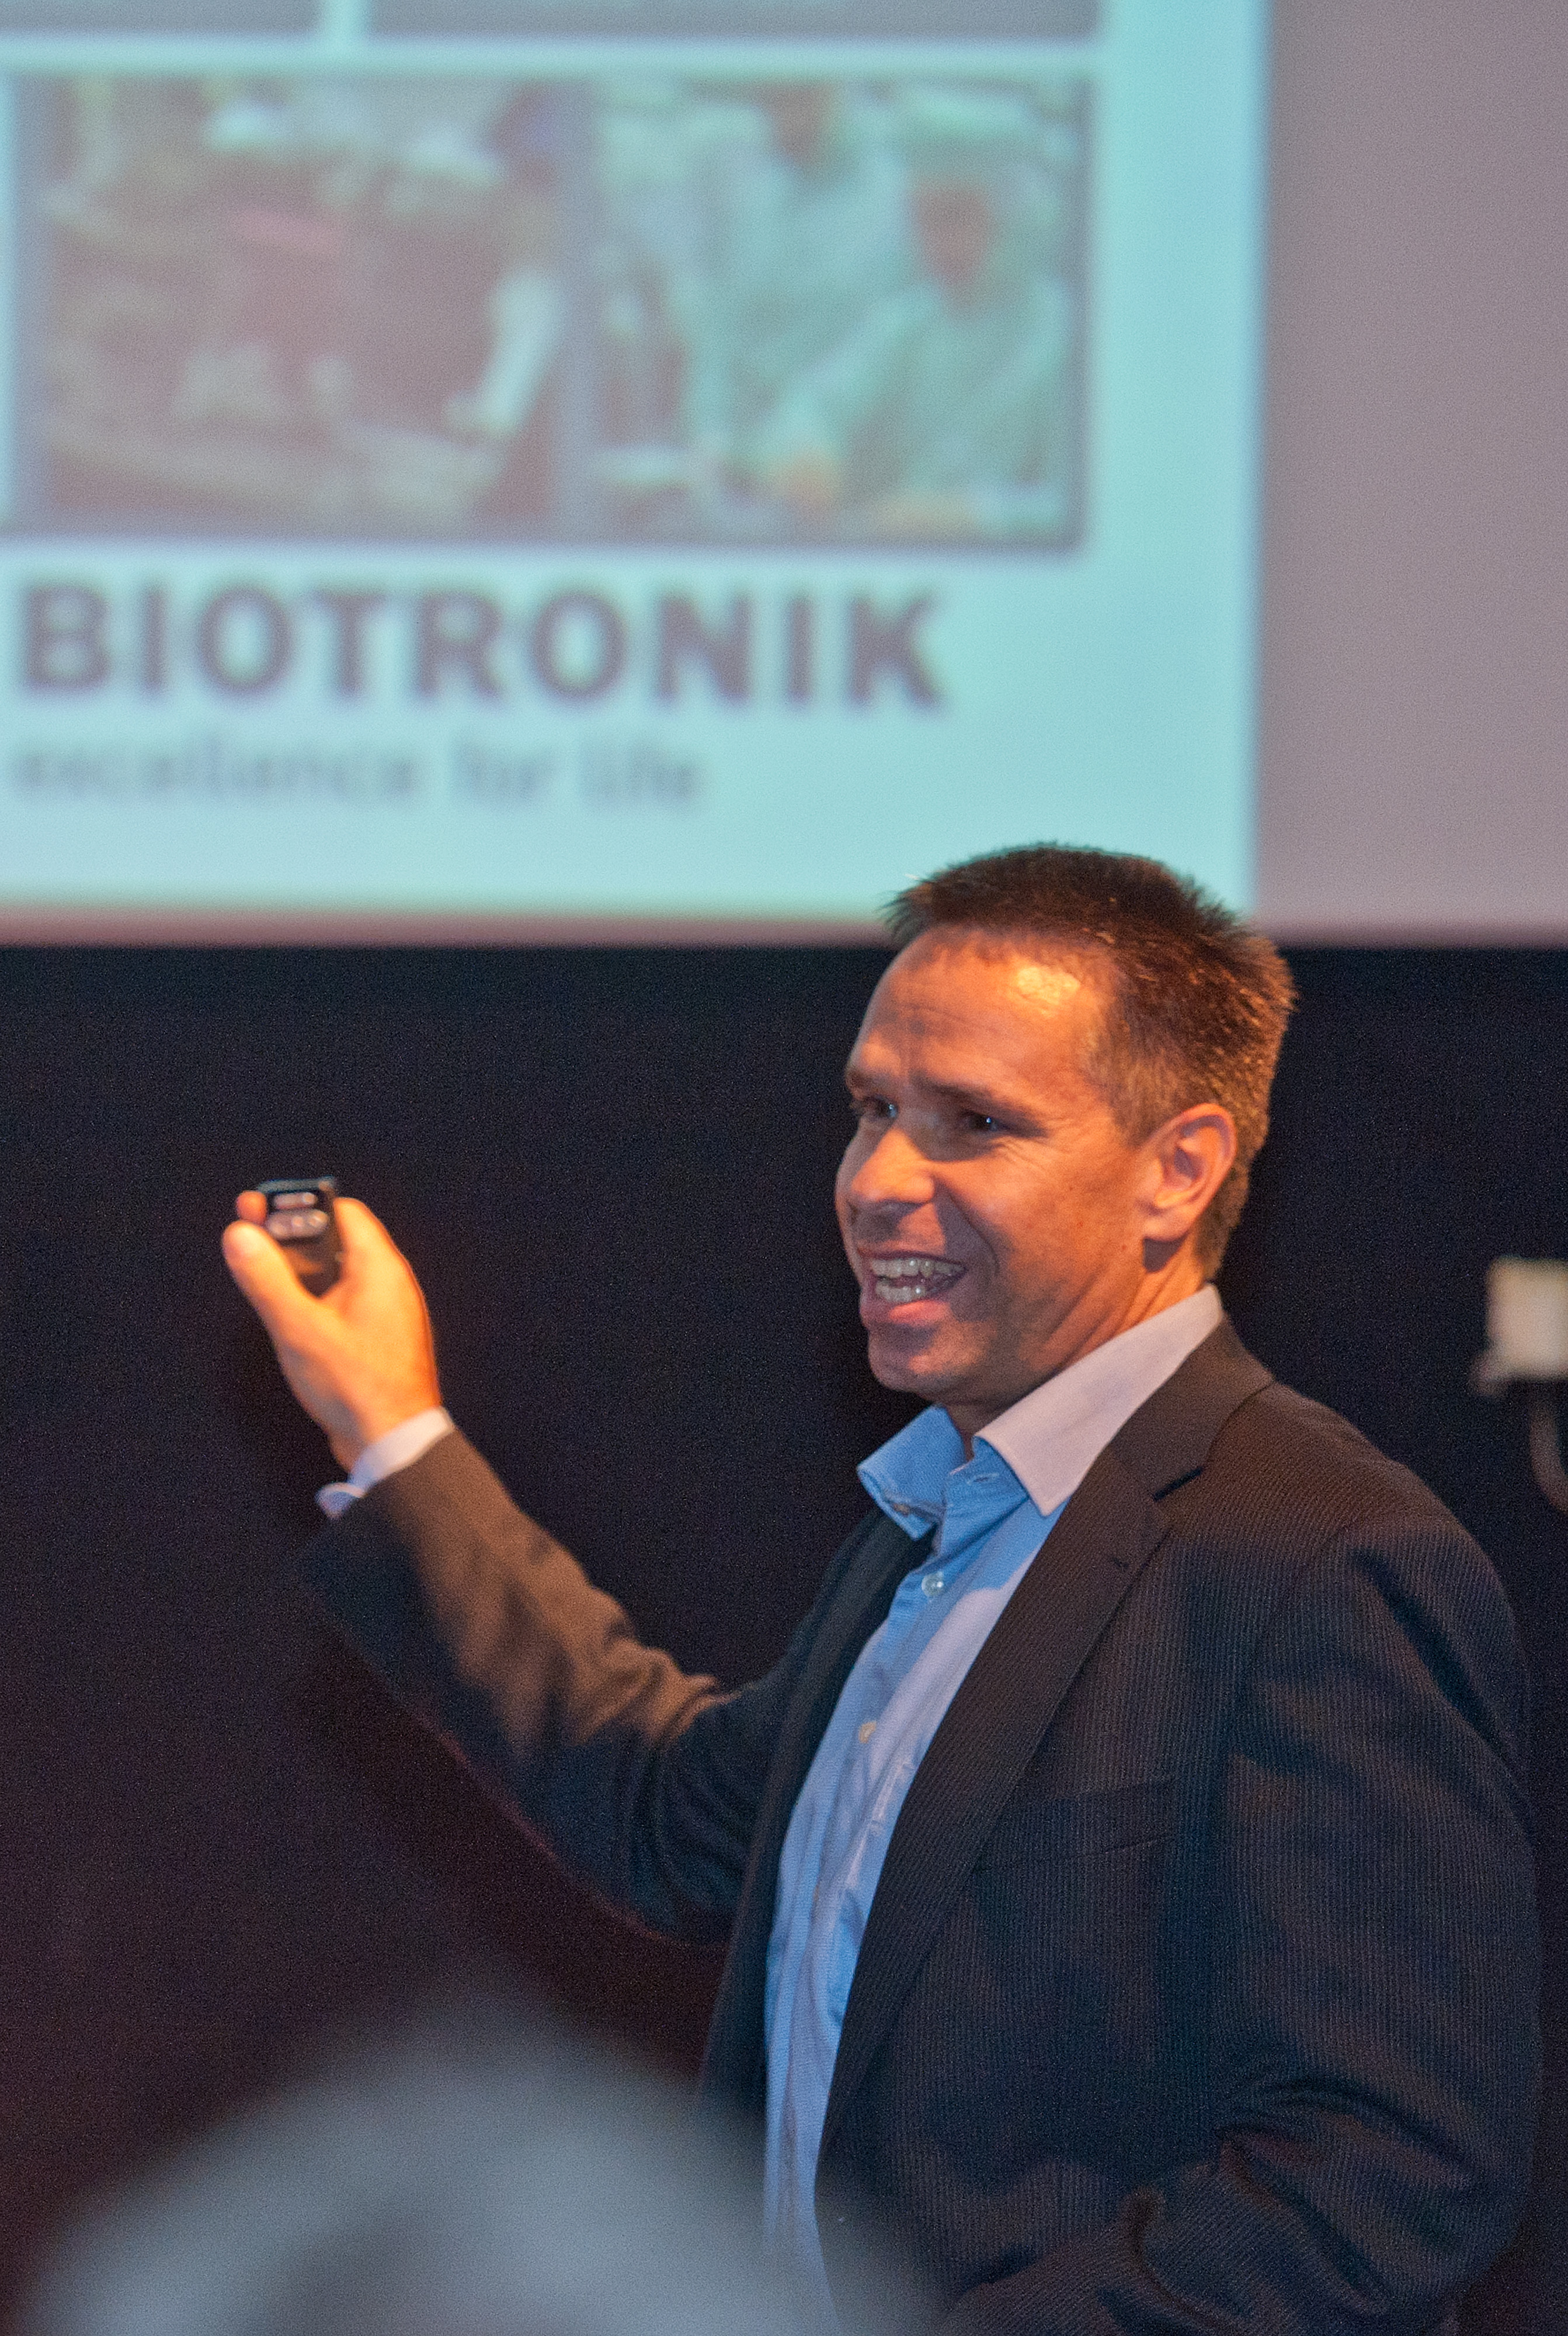 André Bucher, Vice President der Biotronik, informiert über Innovation in der Medizinaltechnik.